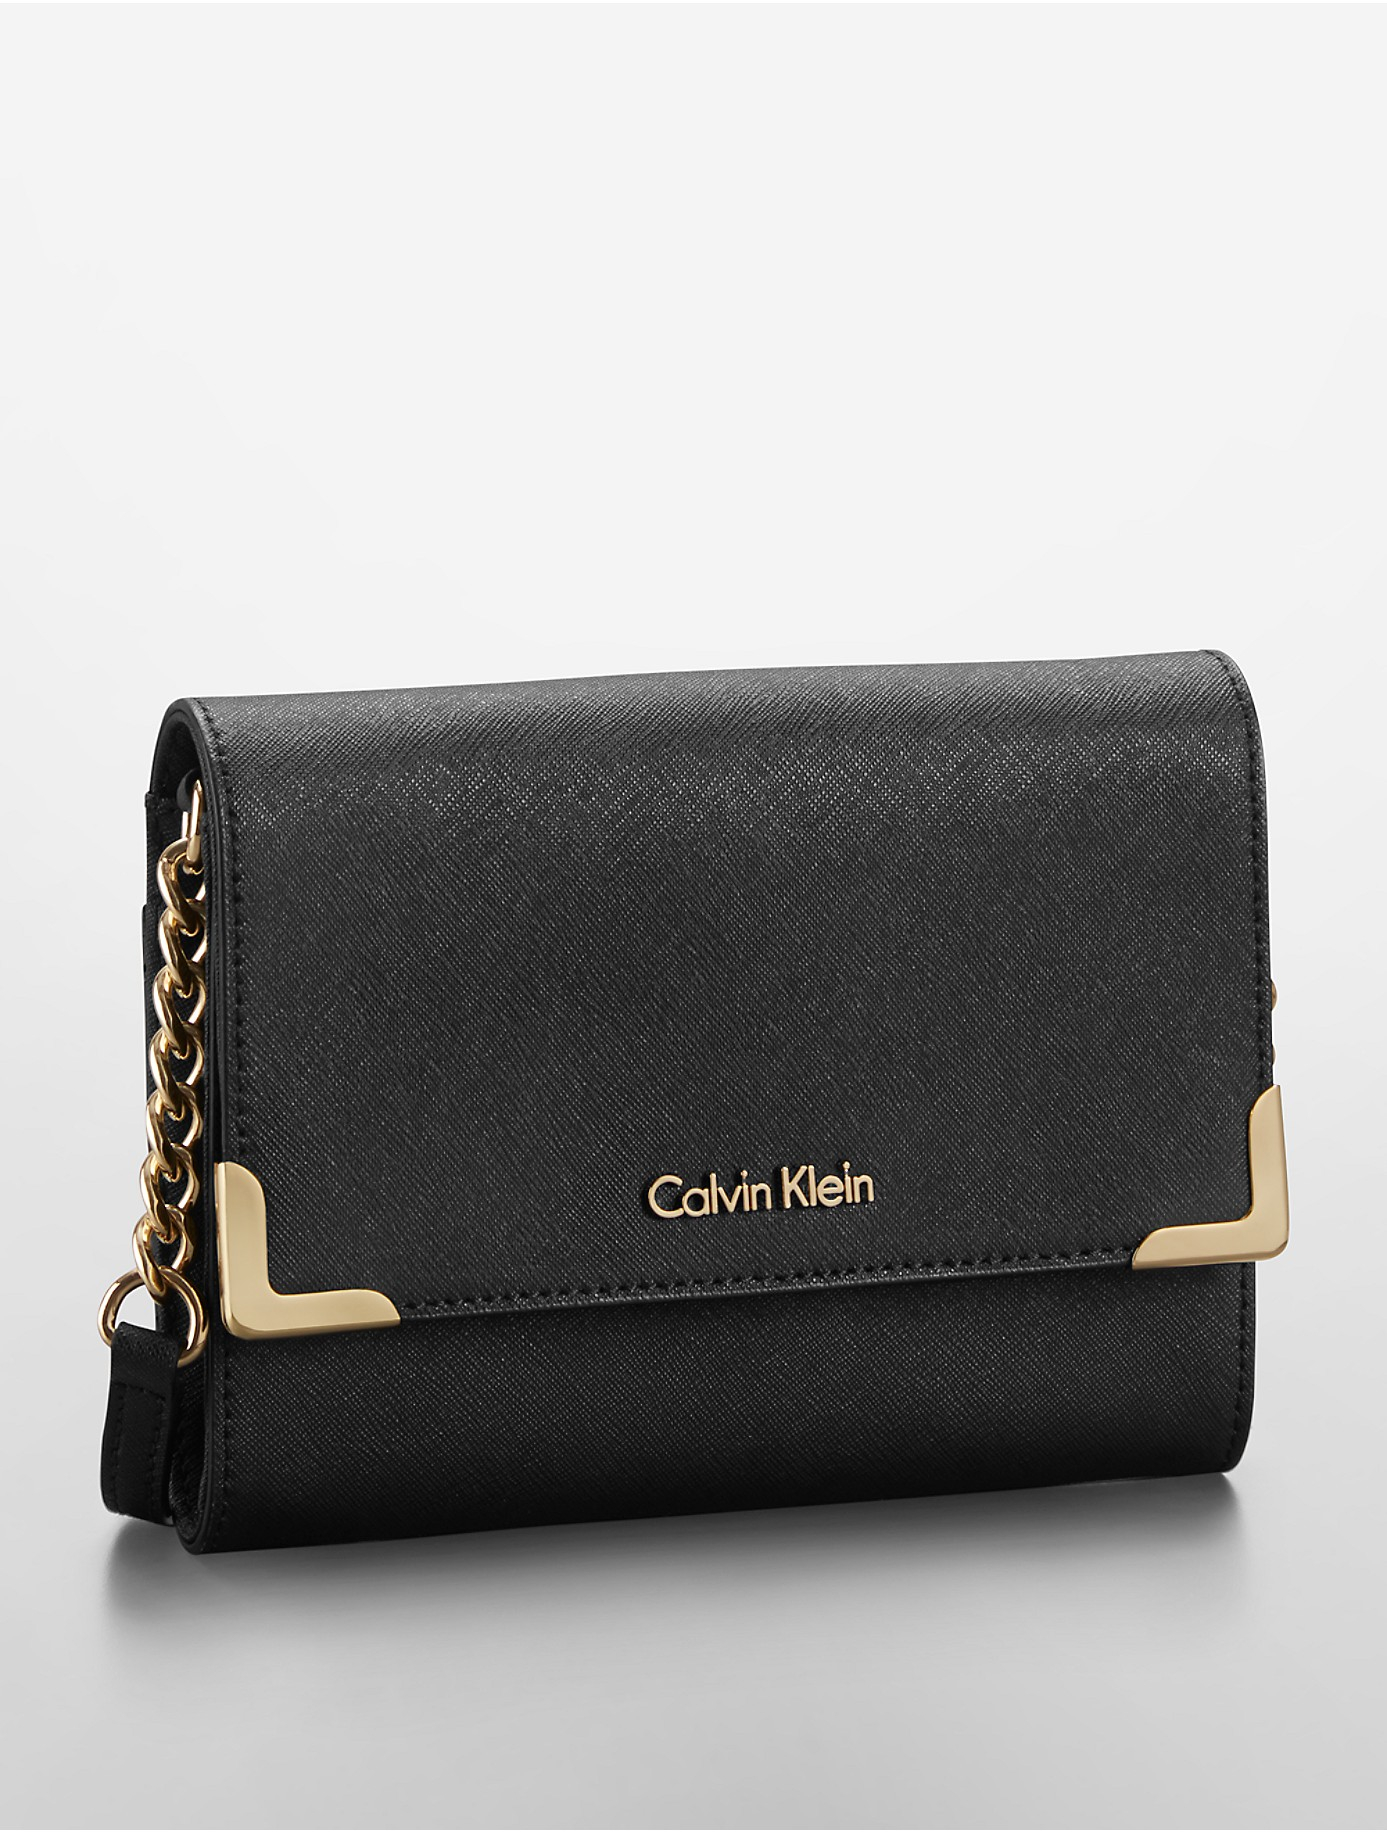 Calvin Klein Saffiano Leather Crossbody Bag in Black/Gold (Black) | Lyst